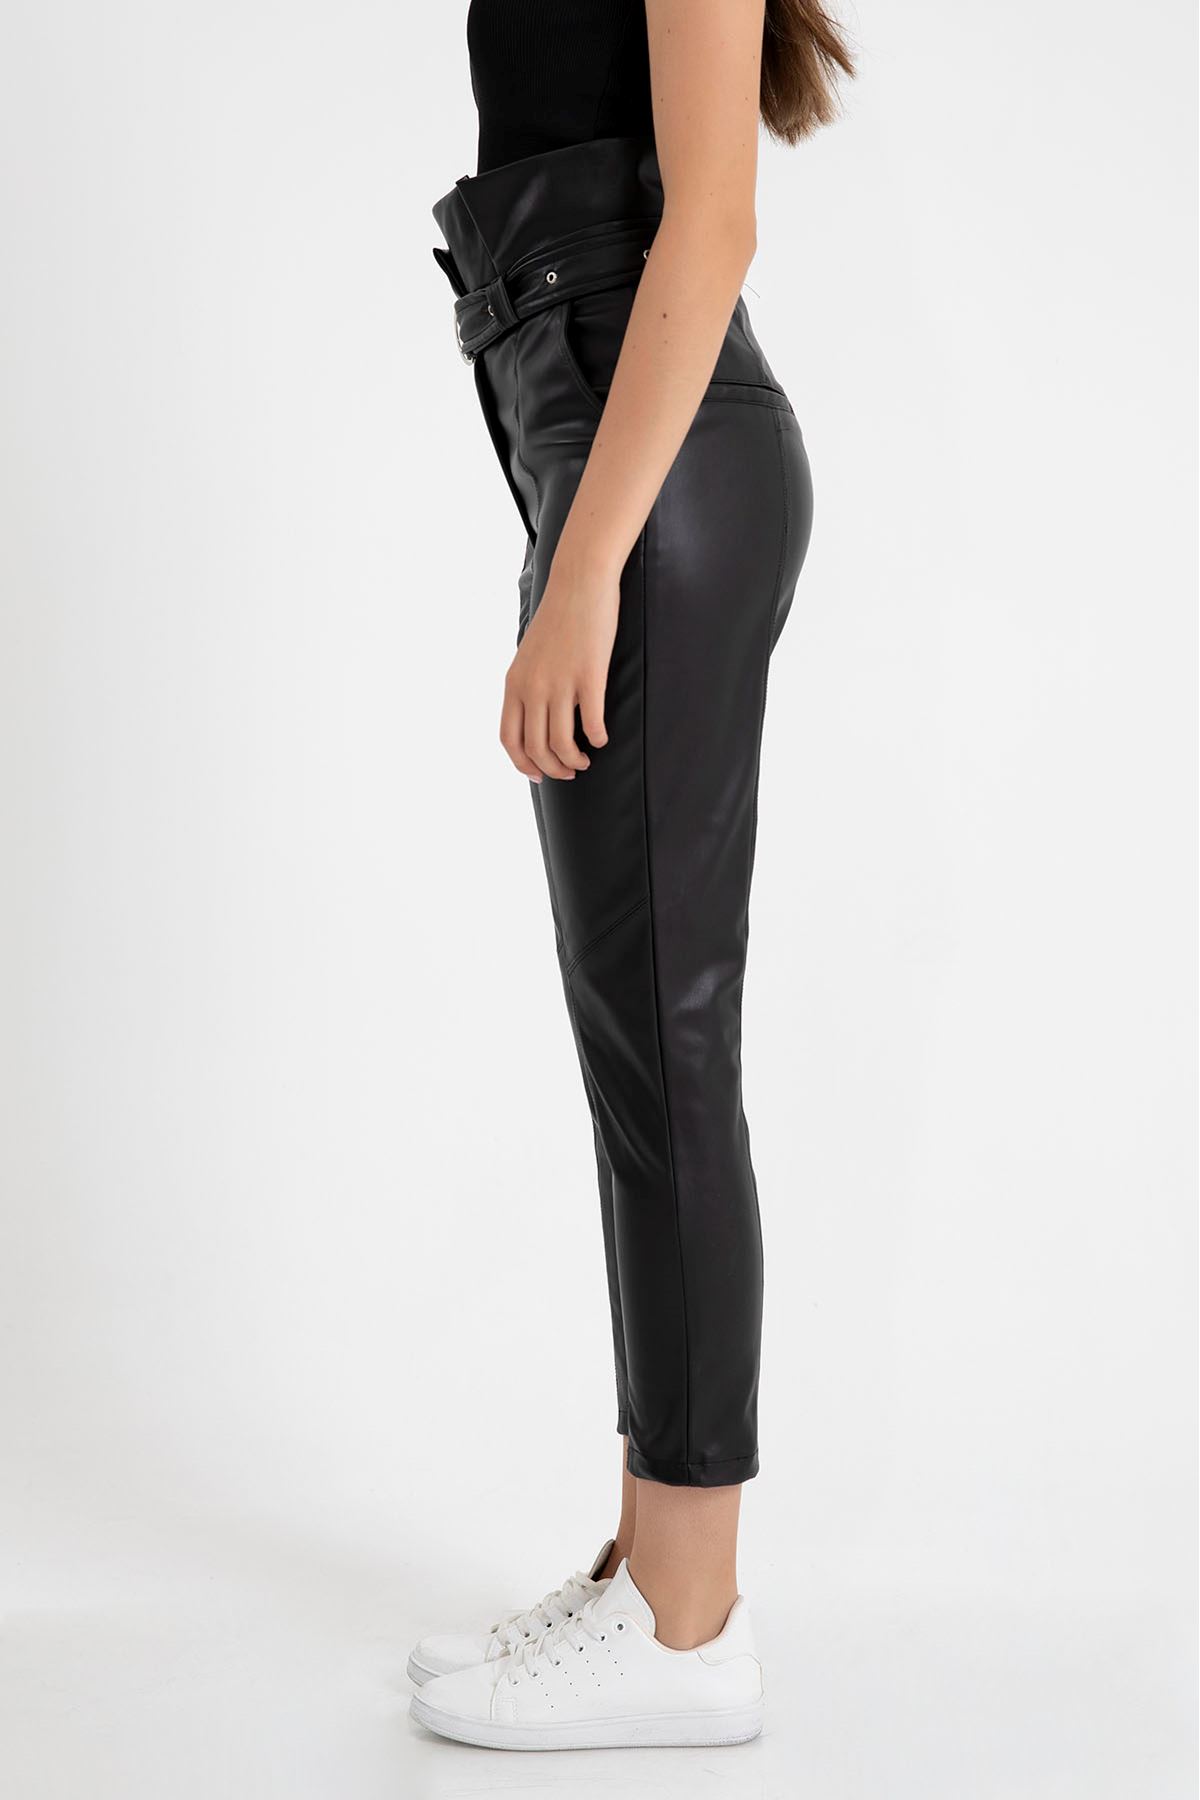 Zara Leather Fabric Ankle Length Tight Fit High Waist Belt Women'S Trouser - Black